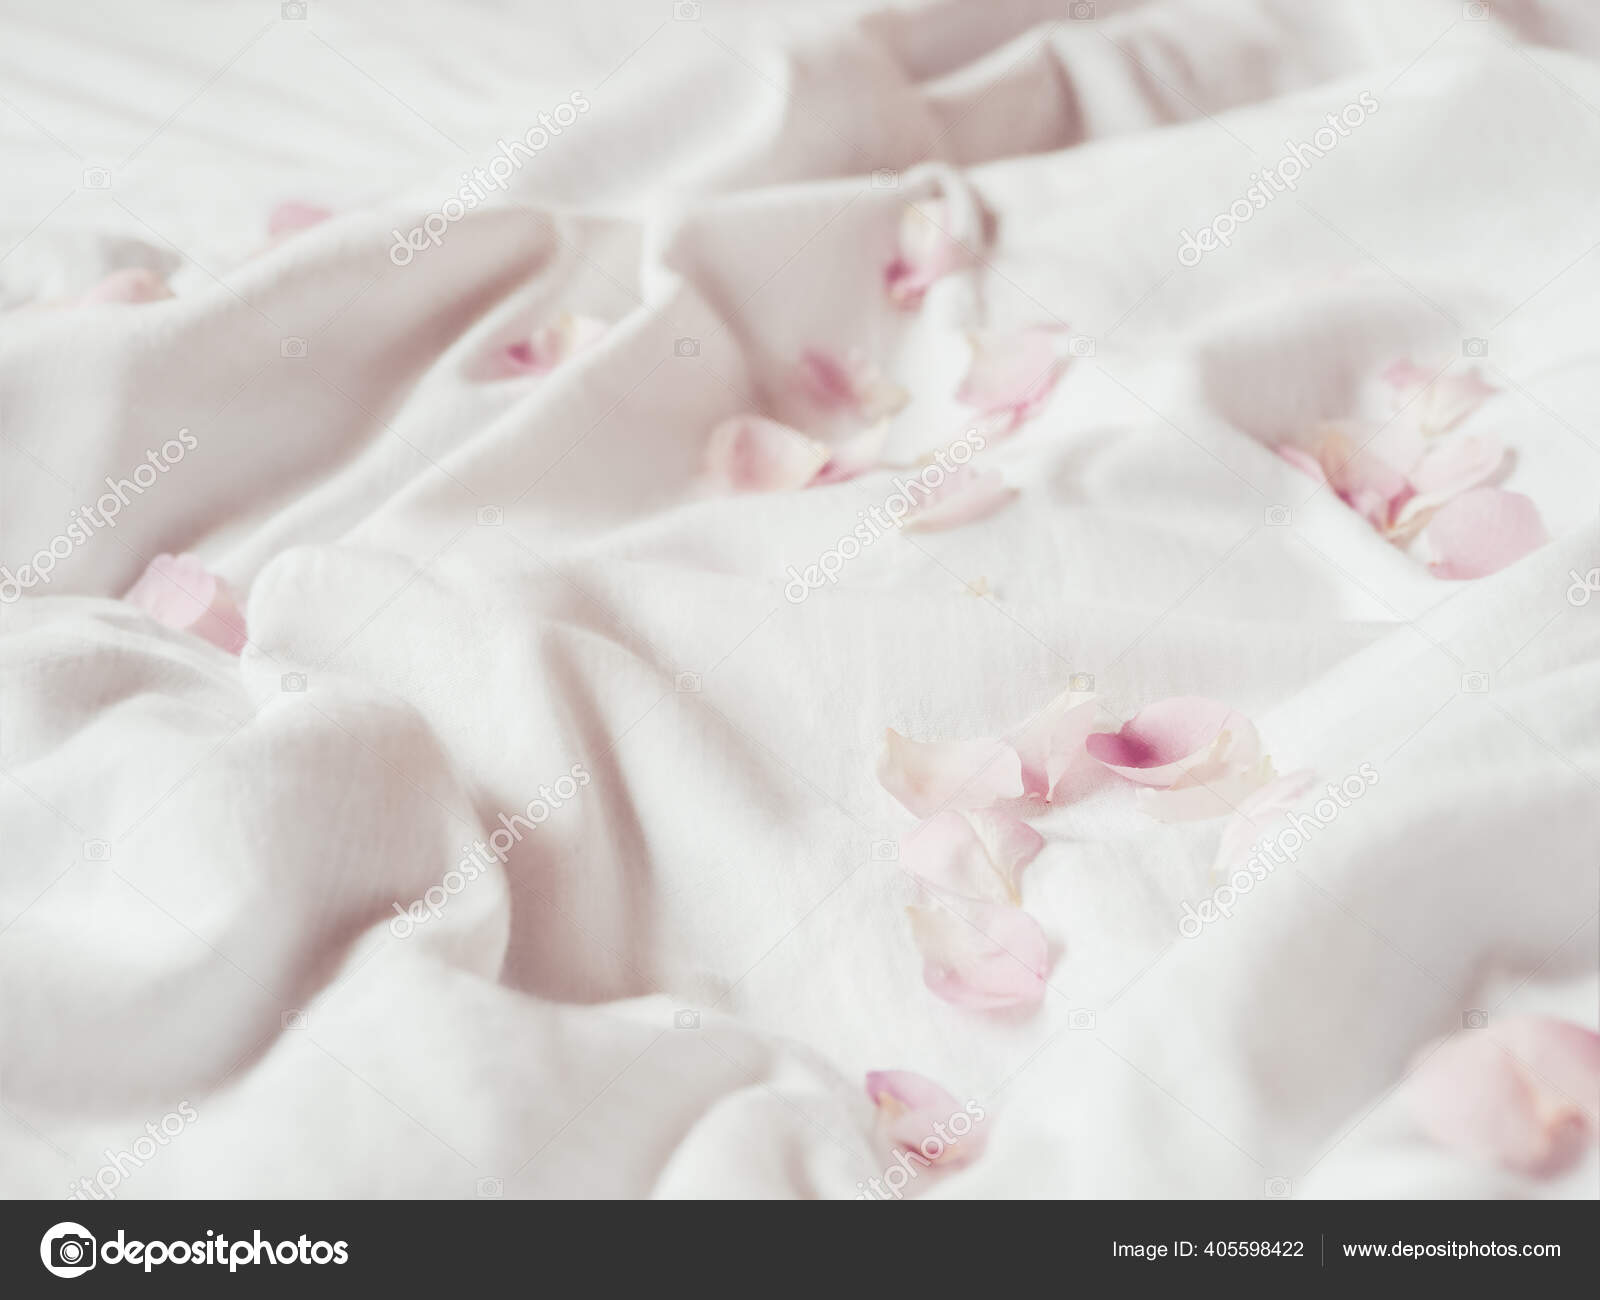 Royalty-Free photo: Pink rose petals